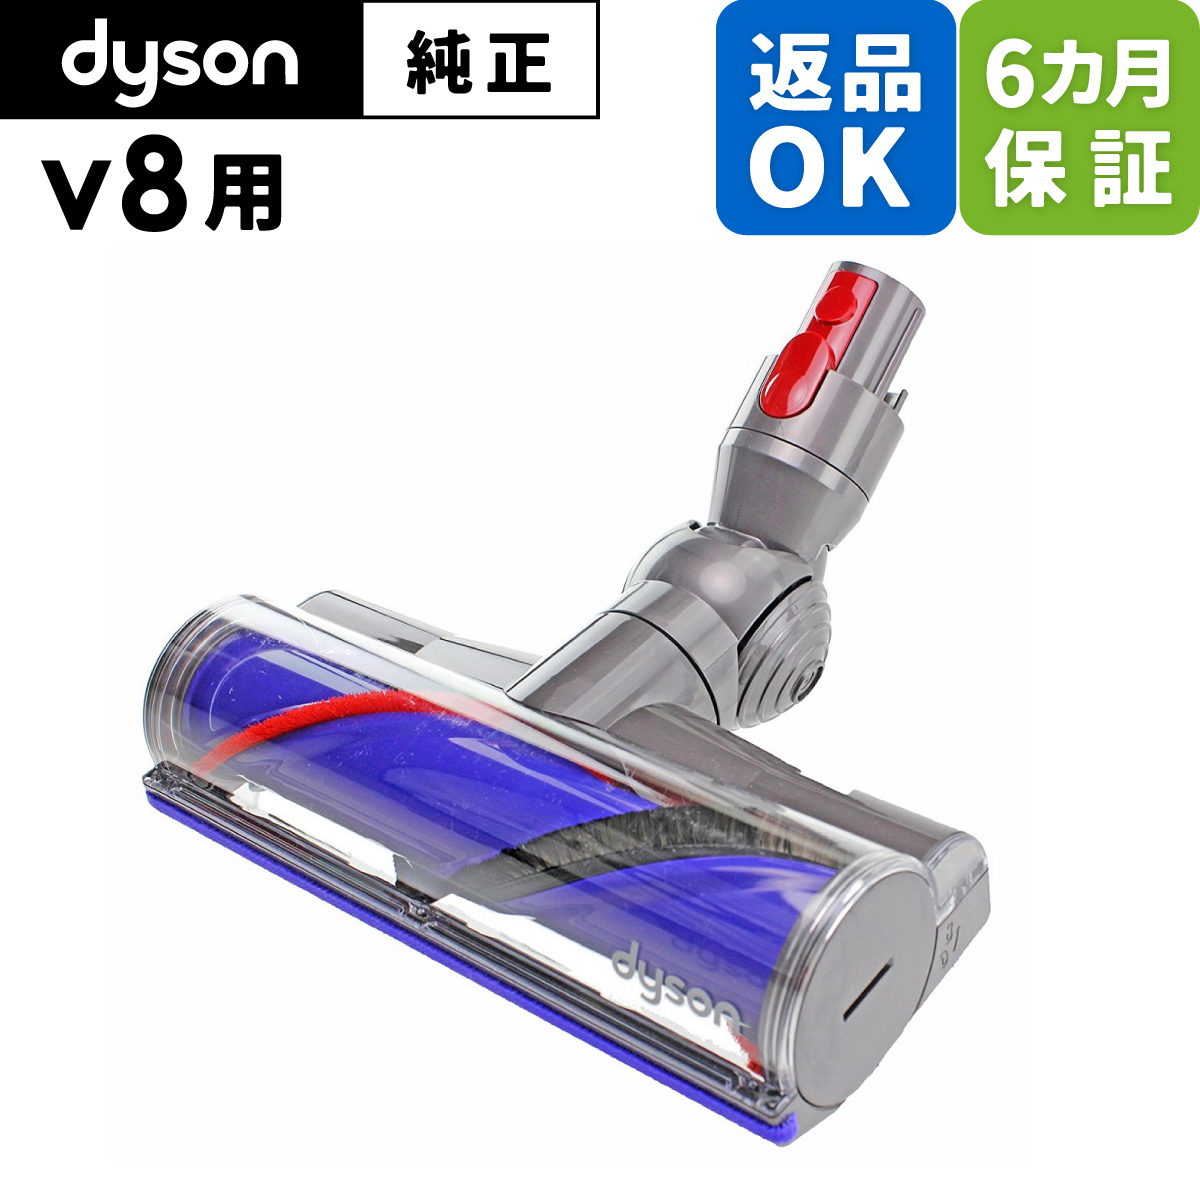 Dyson ダイソン 掃除機 純正 パーツ 返品OK 6カ月保証 ダイレクトドライブクリーナーヘッド V8 適合  SV10 モデル 部品 交換 ※slim対象外